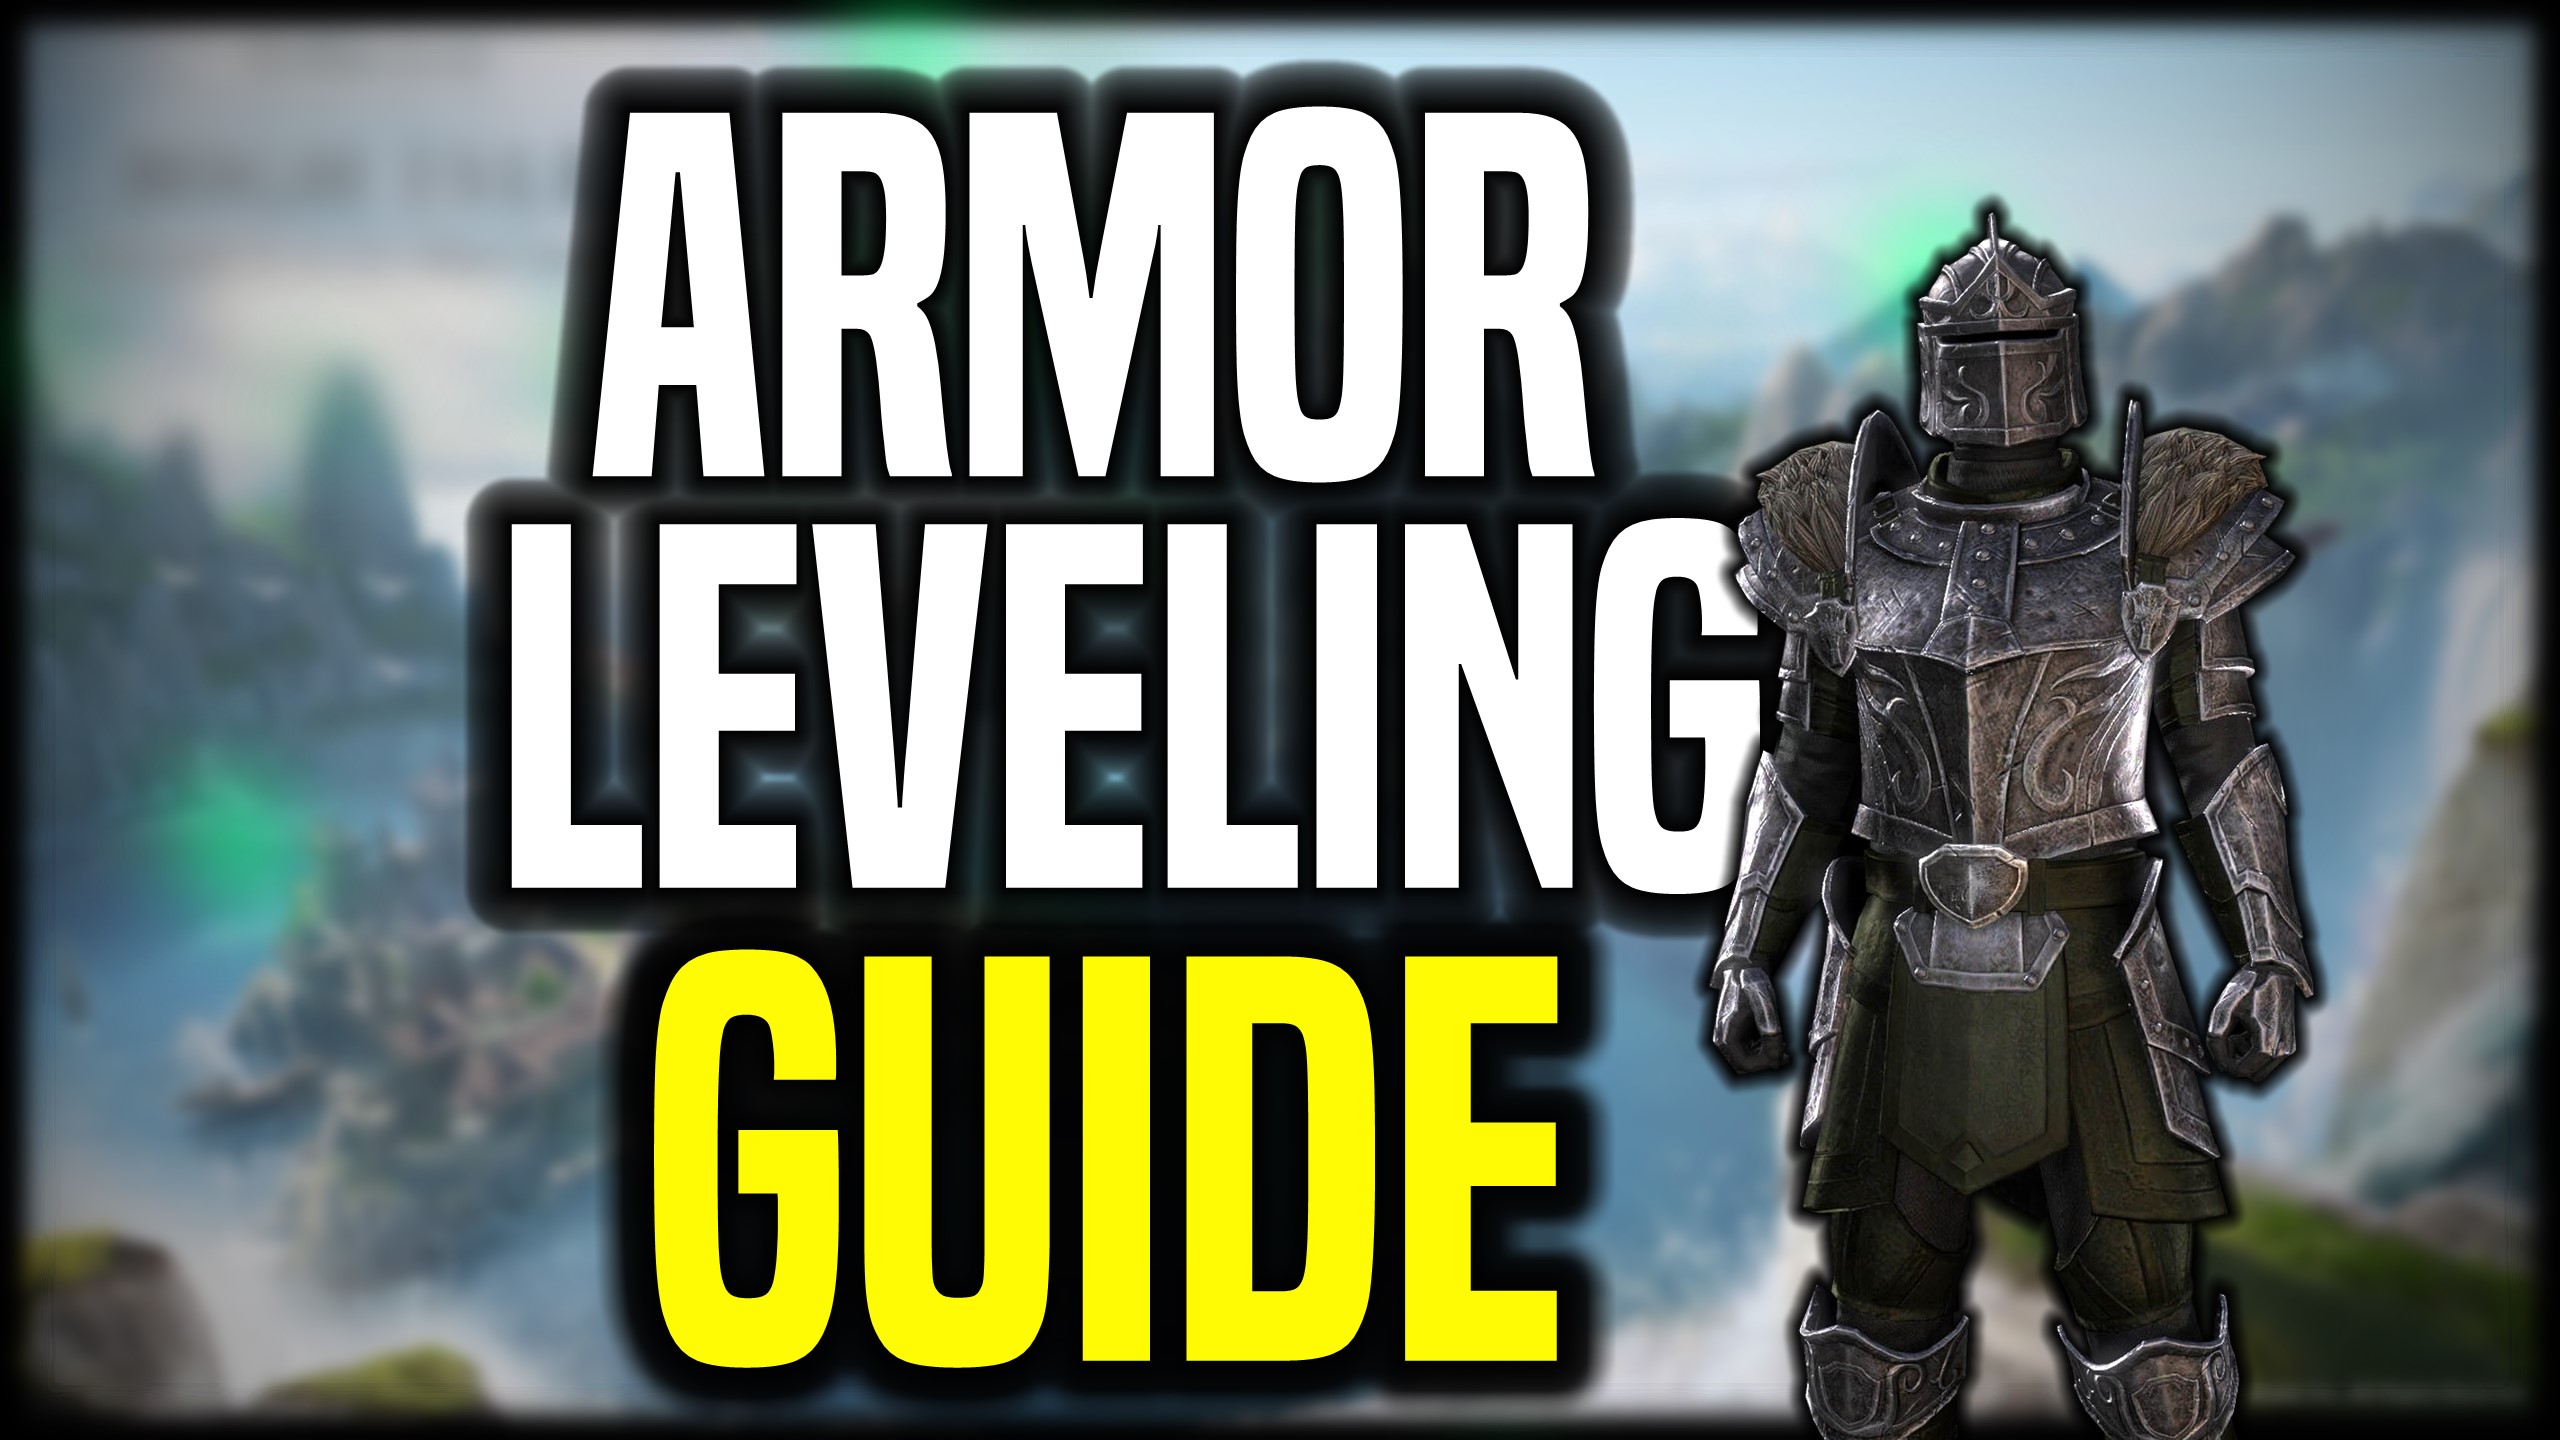 The Outer Worlds Armor guide - Armor Rating explained, Light vs Heavy armor